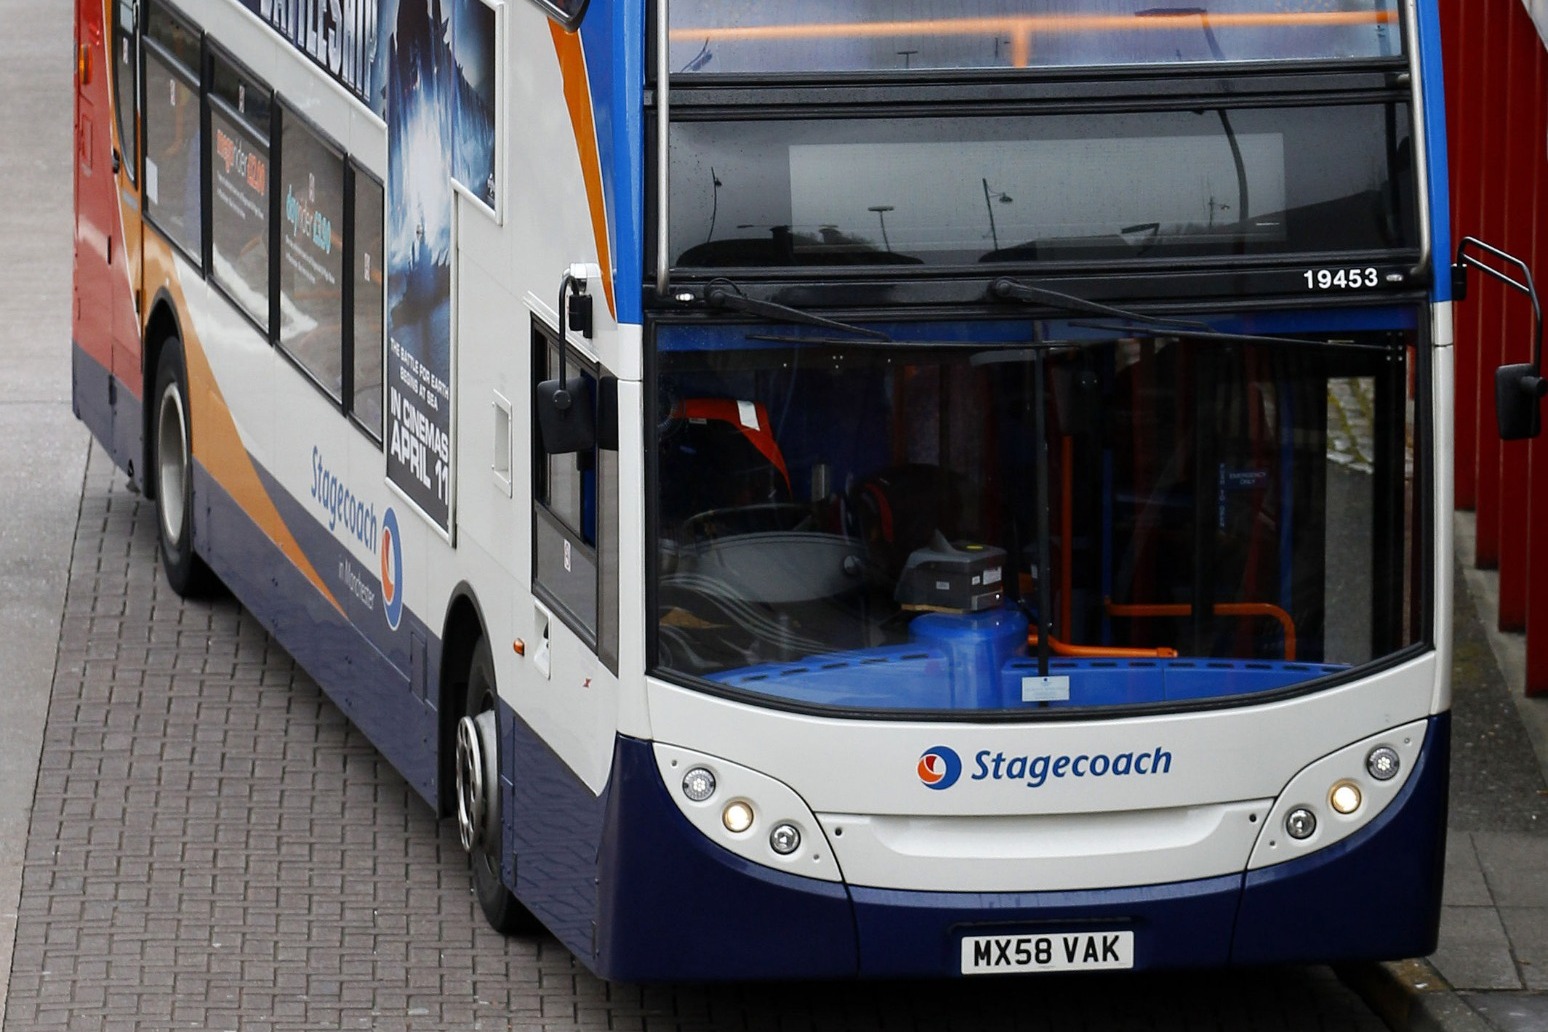 £2 cap on bus fares introduced 